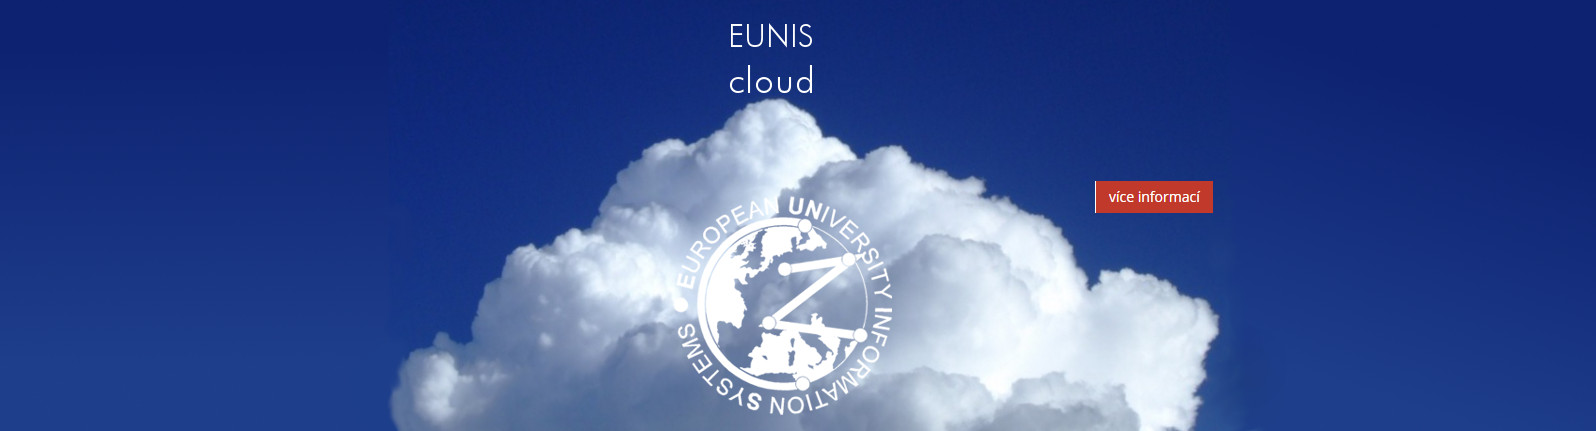 EUNIS cloud